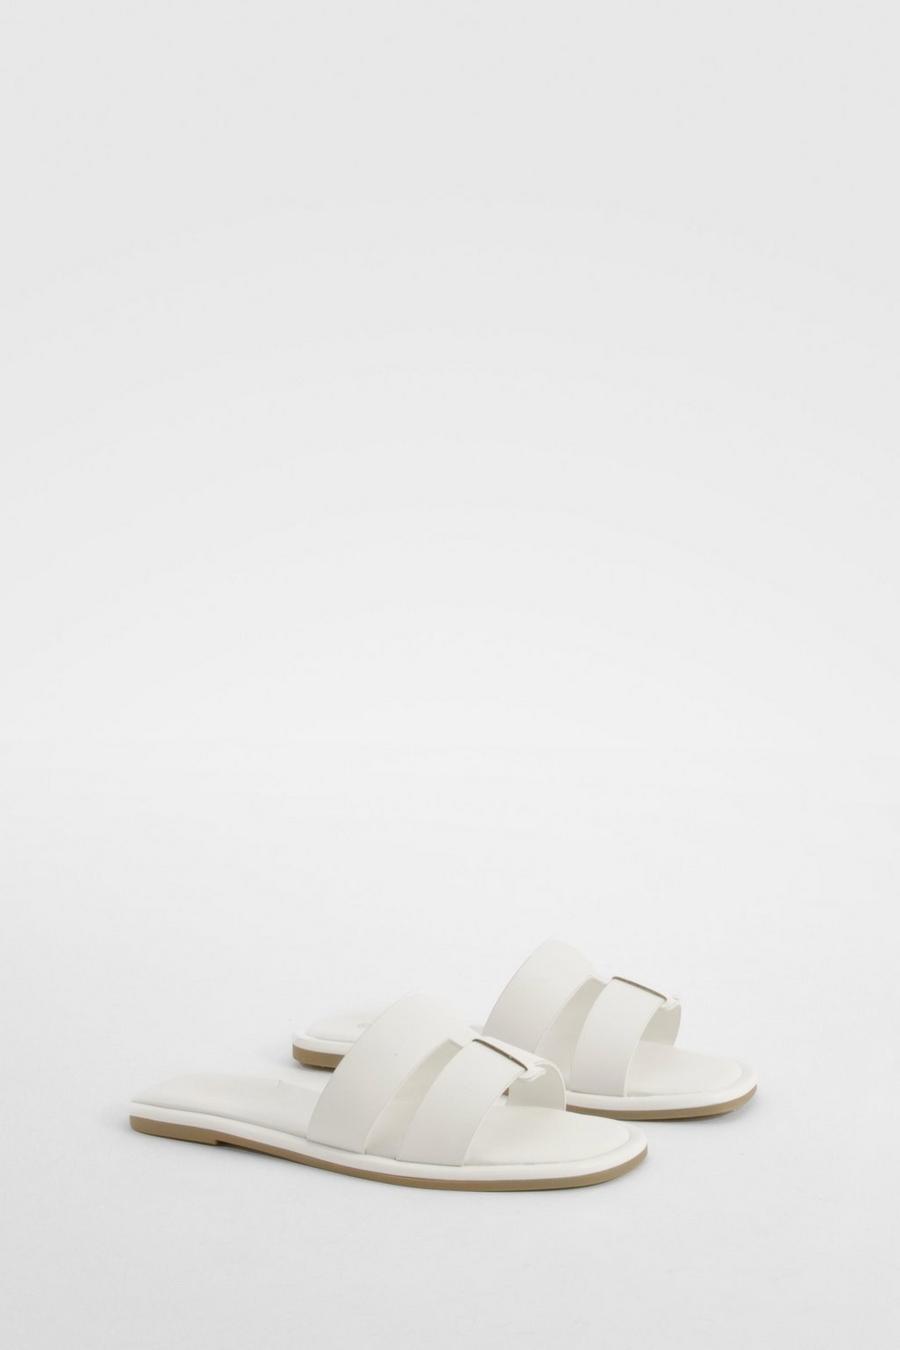 Woven Mule Sandals, White